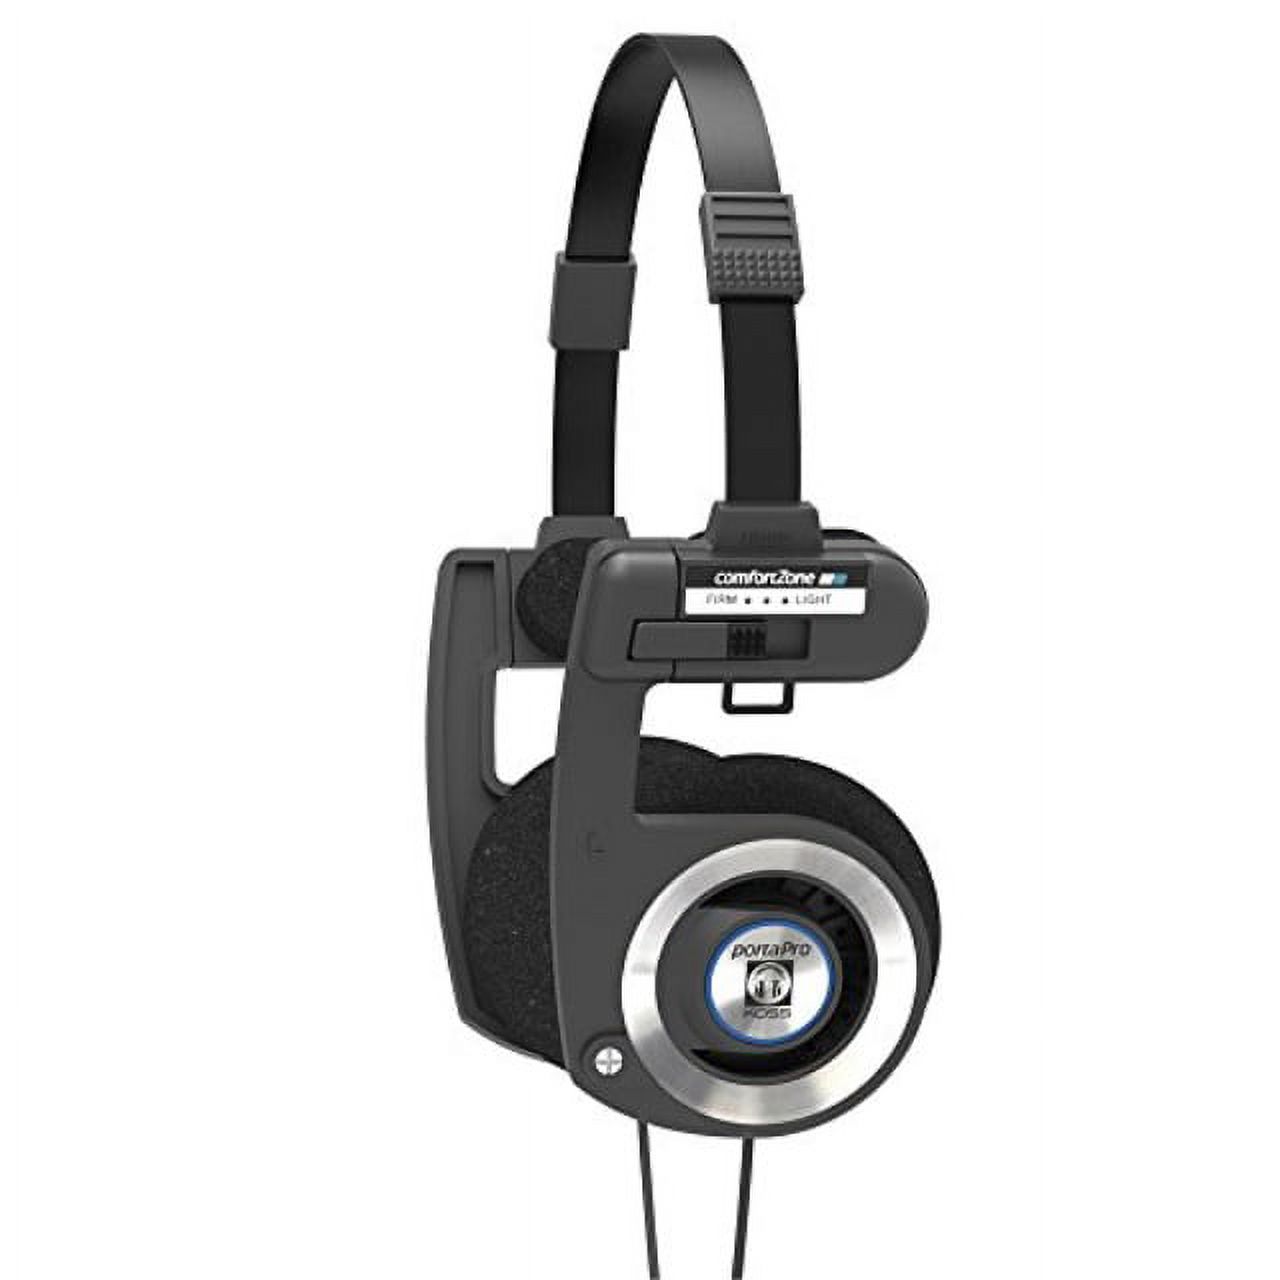 Koss Porta Pro Black On Ear Headphones with Case Black - image 1 of 2